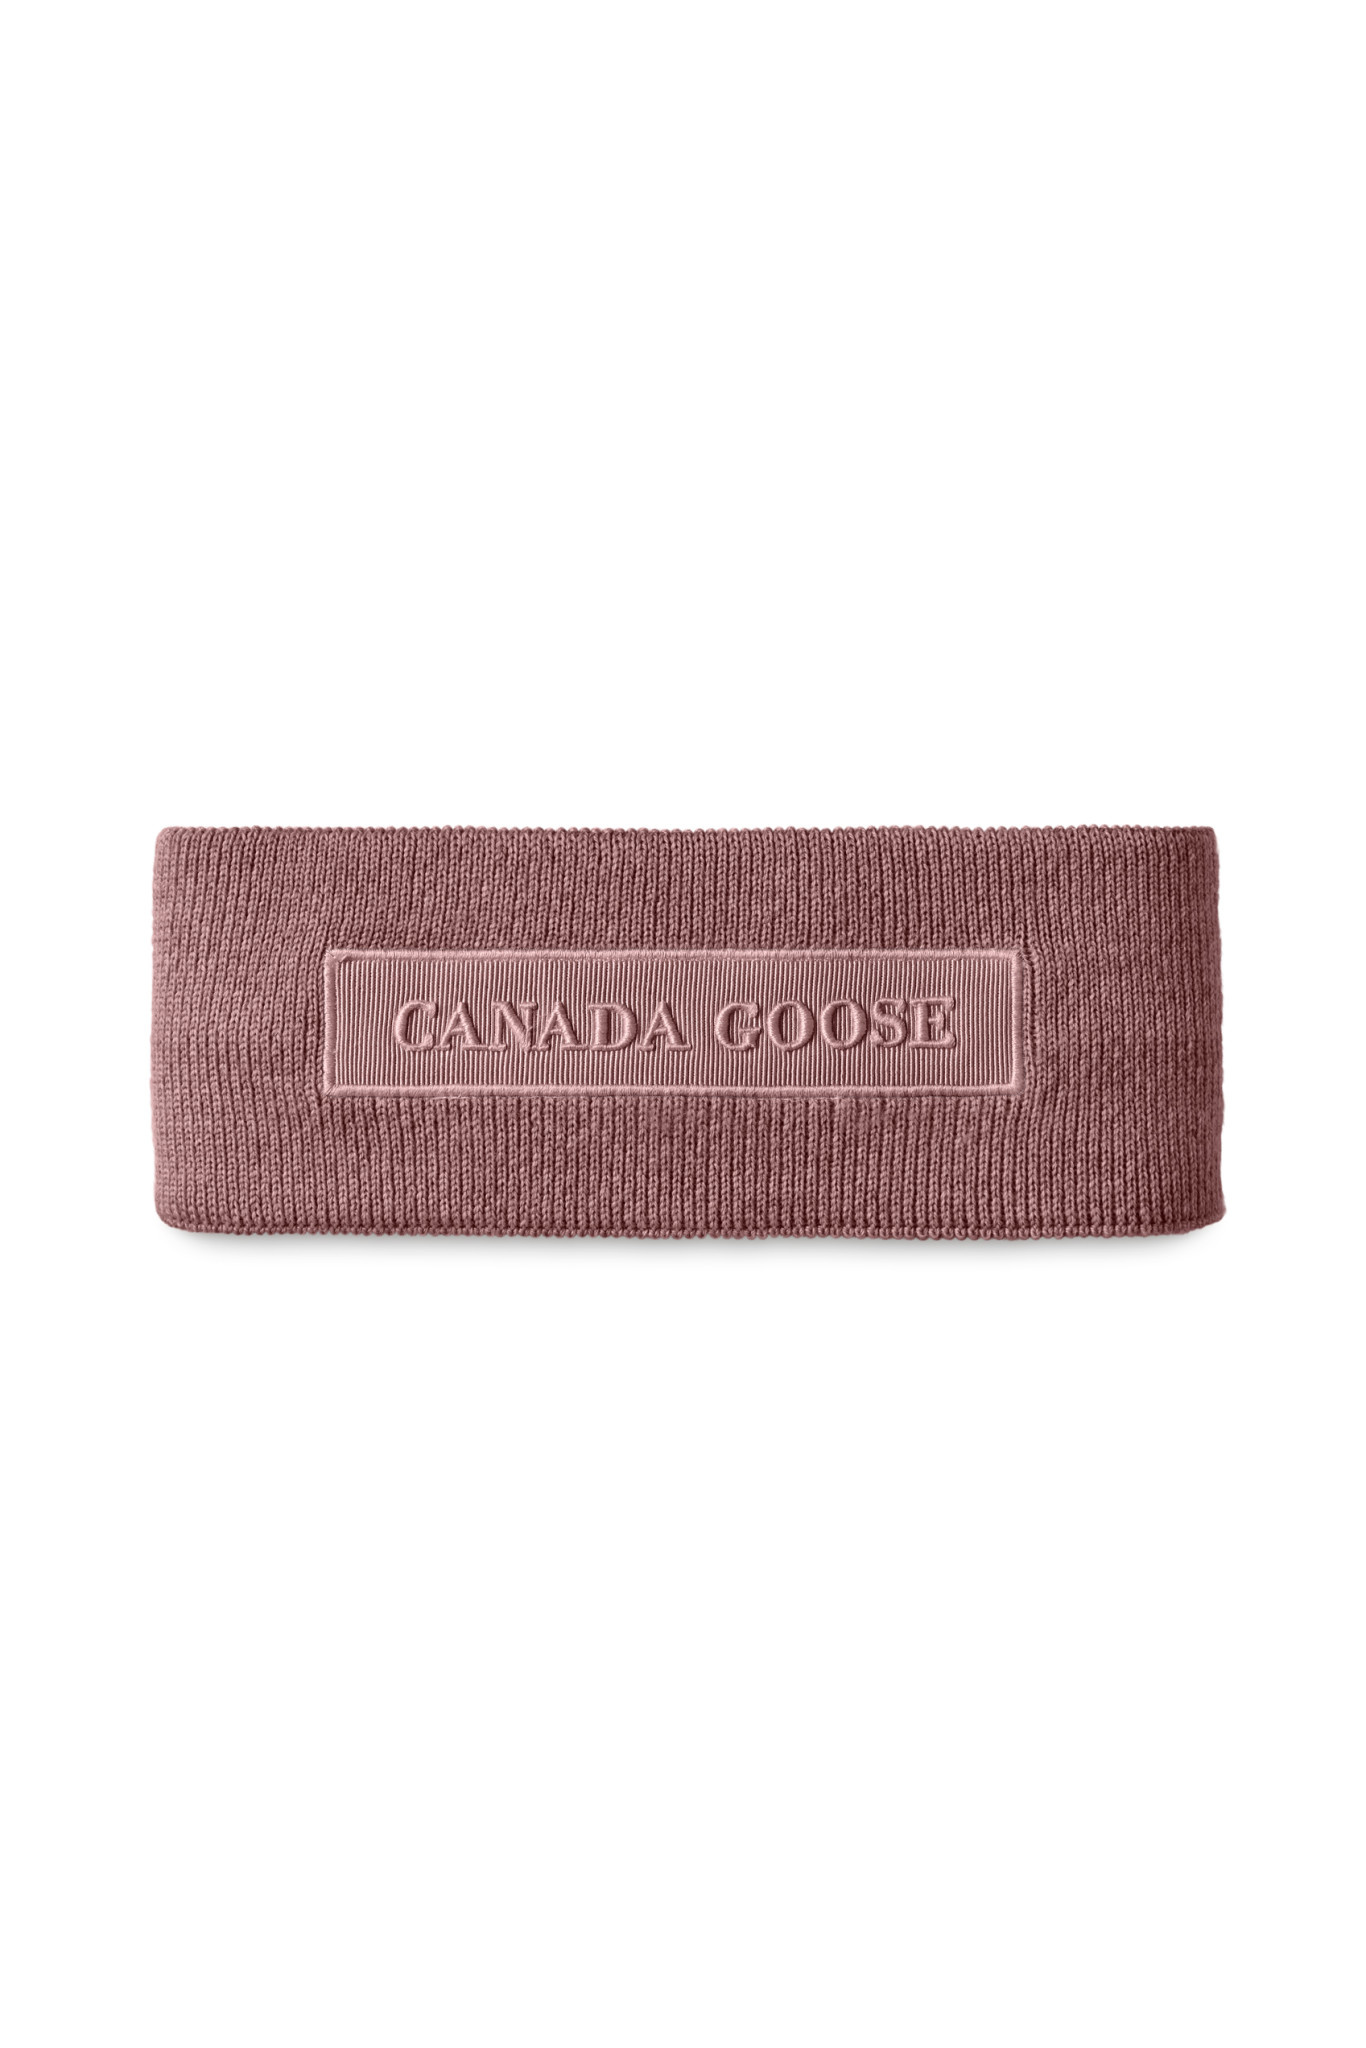 Canada Goose Canada Goose Tonal Emblem Ear Warmer